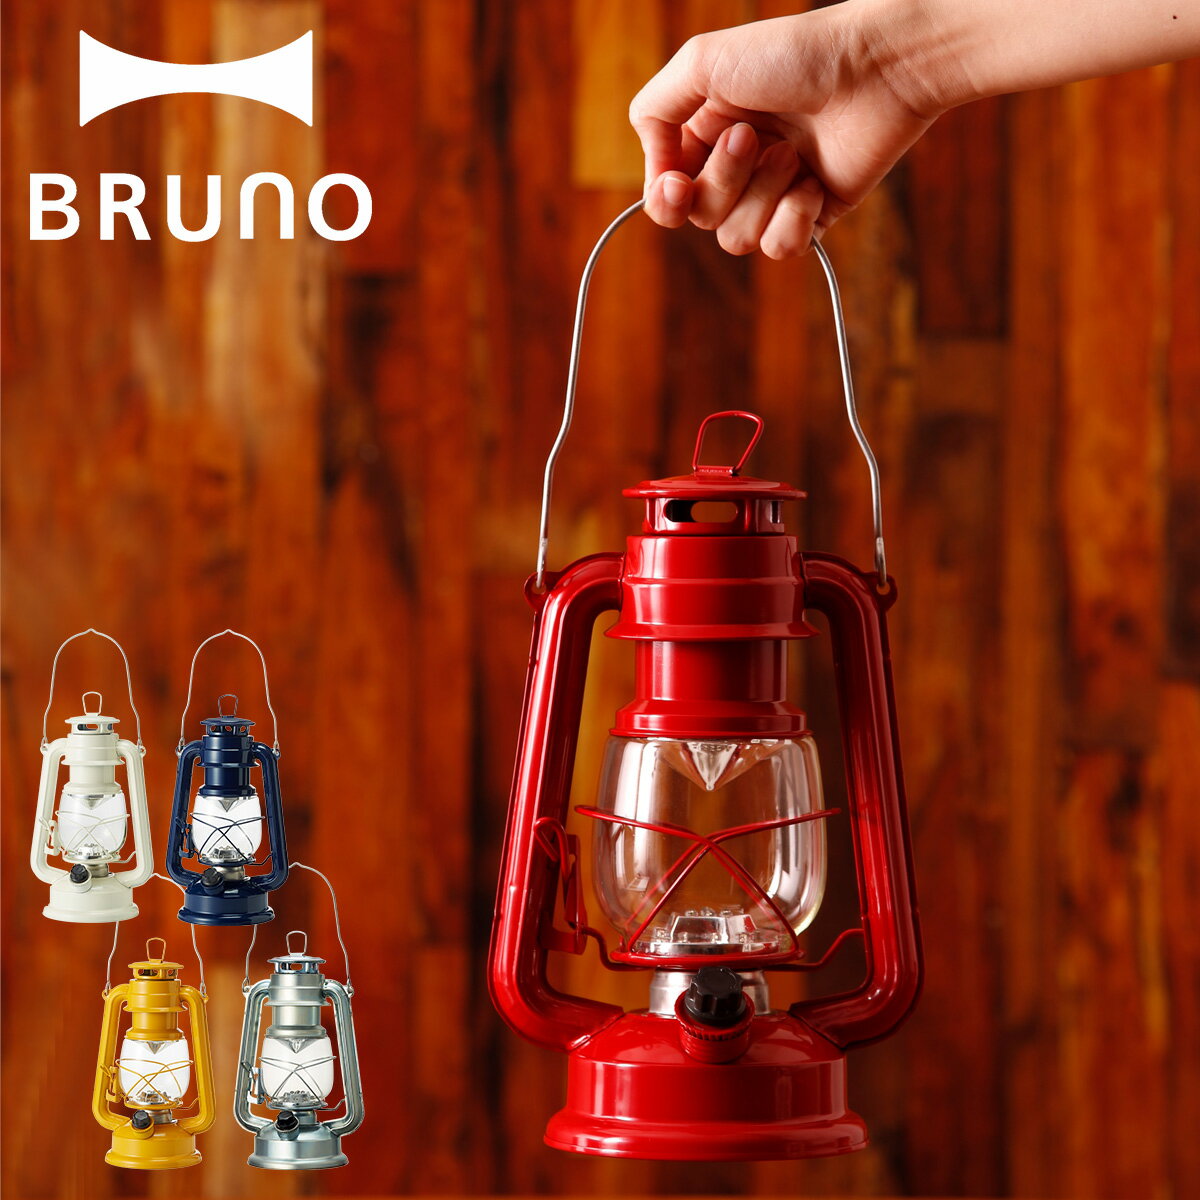 BRUNO ブルーノ LEDランタン 卓上ランプ ライト 電灯 灯り 電池式 15灯 照度調節機能 持ち手付き 雑貨 防災 キャンプ アウトドア インテリア アンティーク ピクニック BOL001